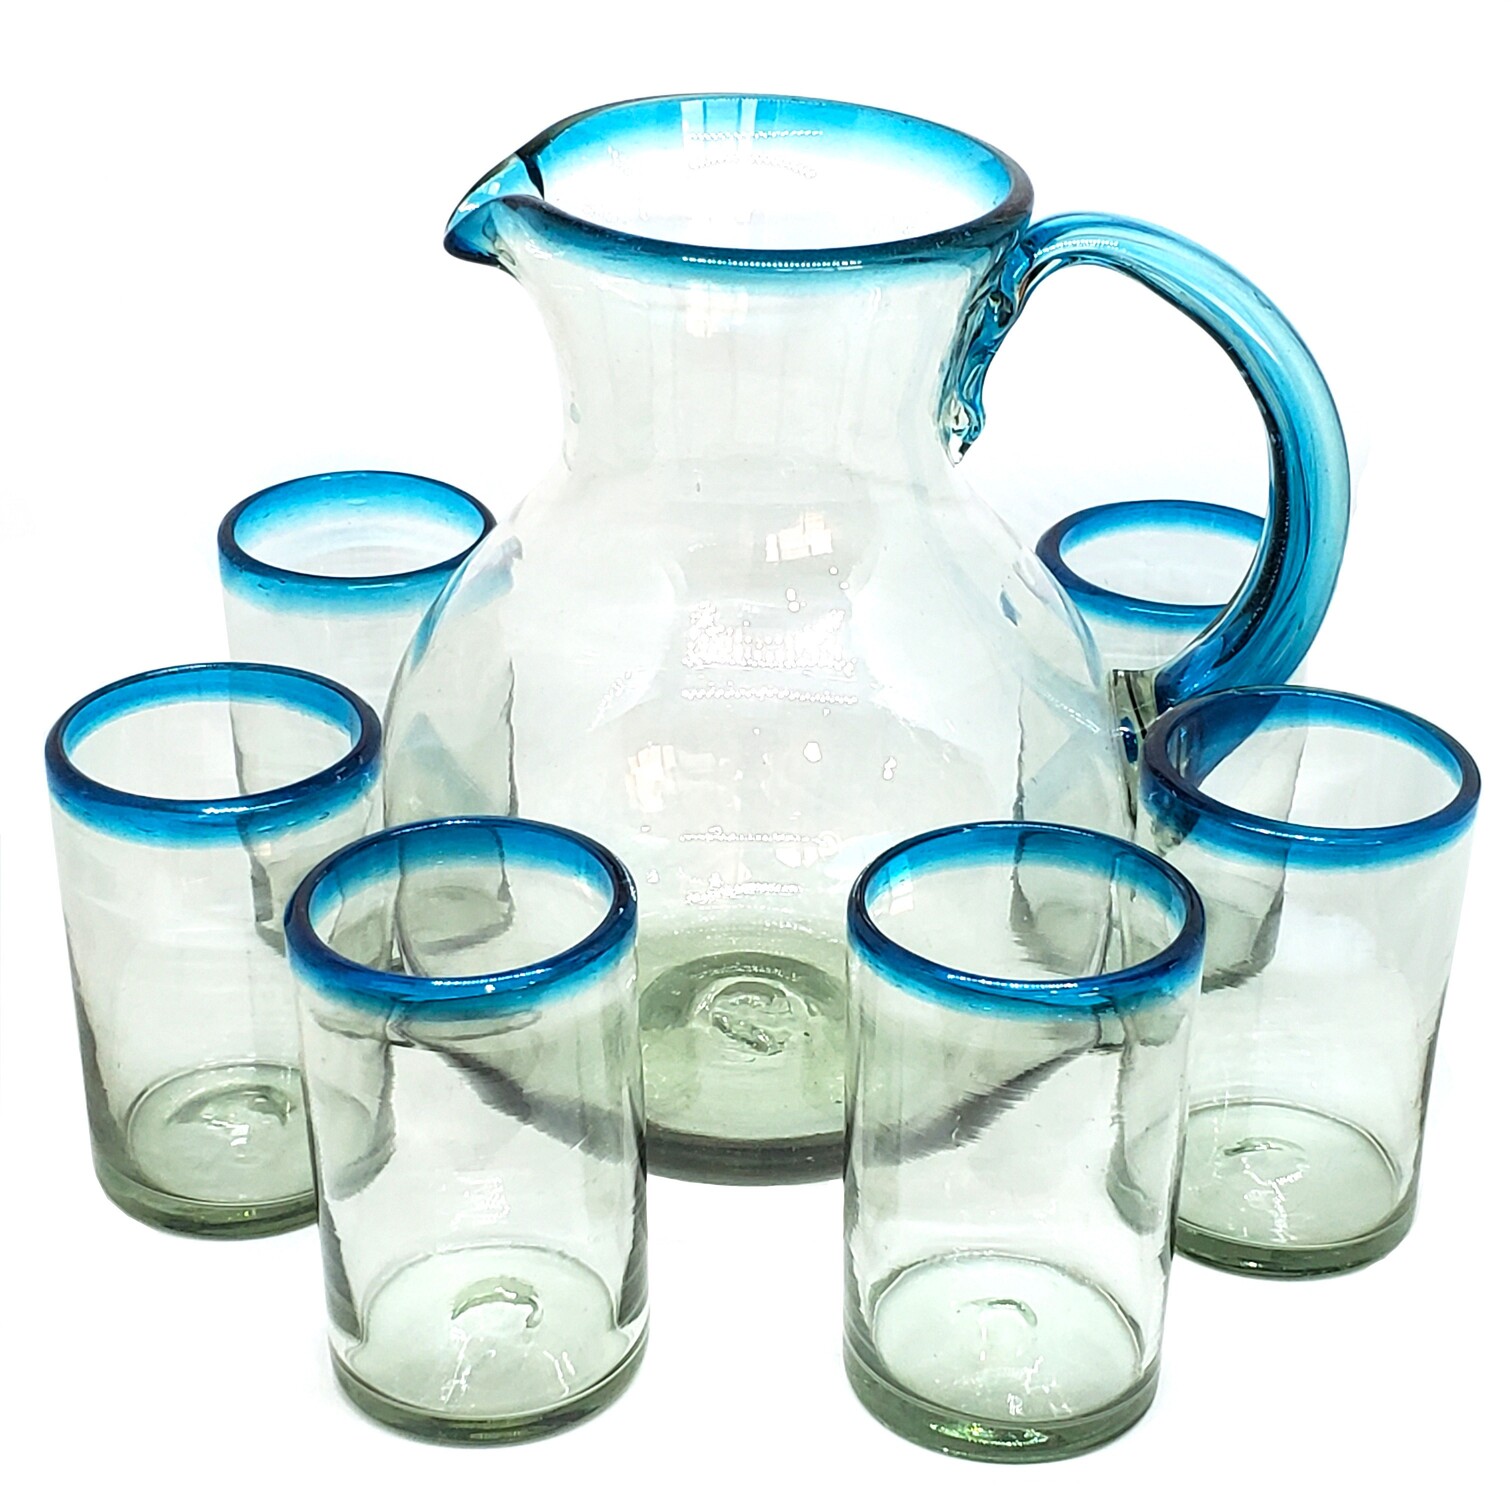 Aqua Blue Rim 120 oz Pitcher and 6 Drinking Glasses set